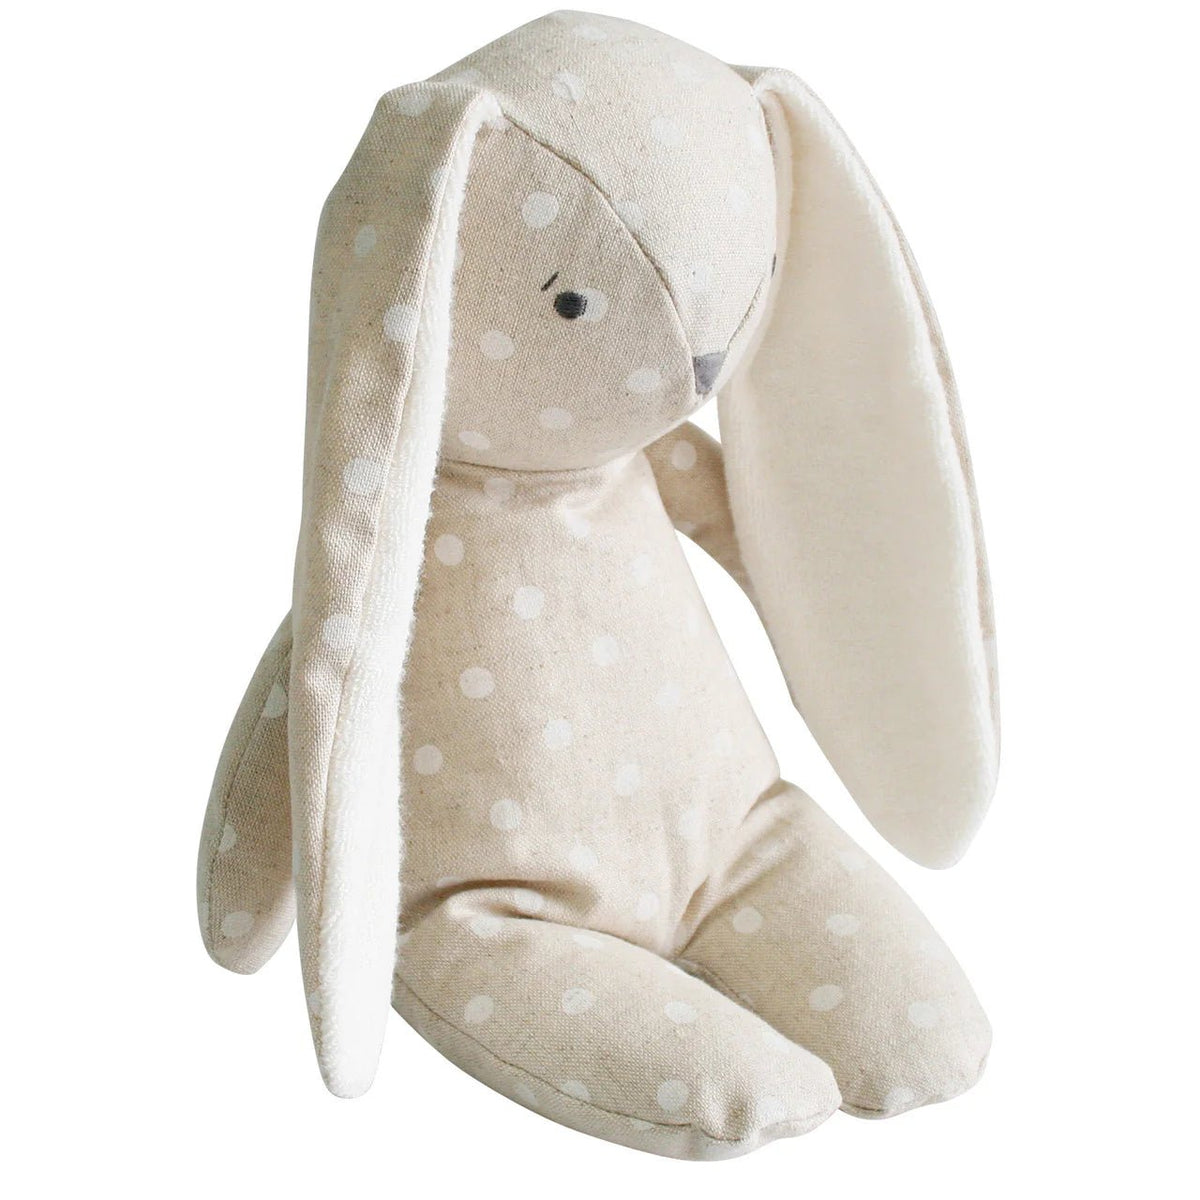 Floppy Bunny by Alimrose - Maude Kids Decor